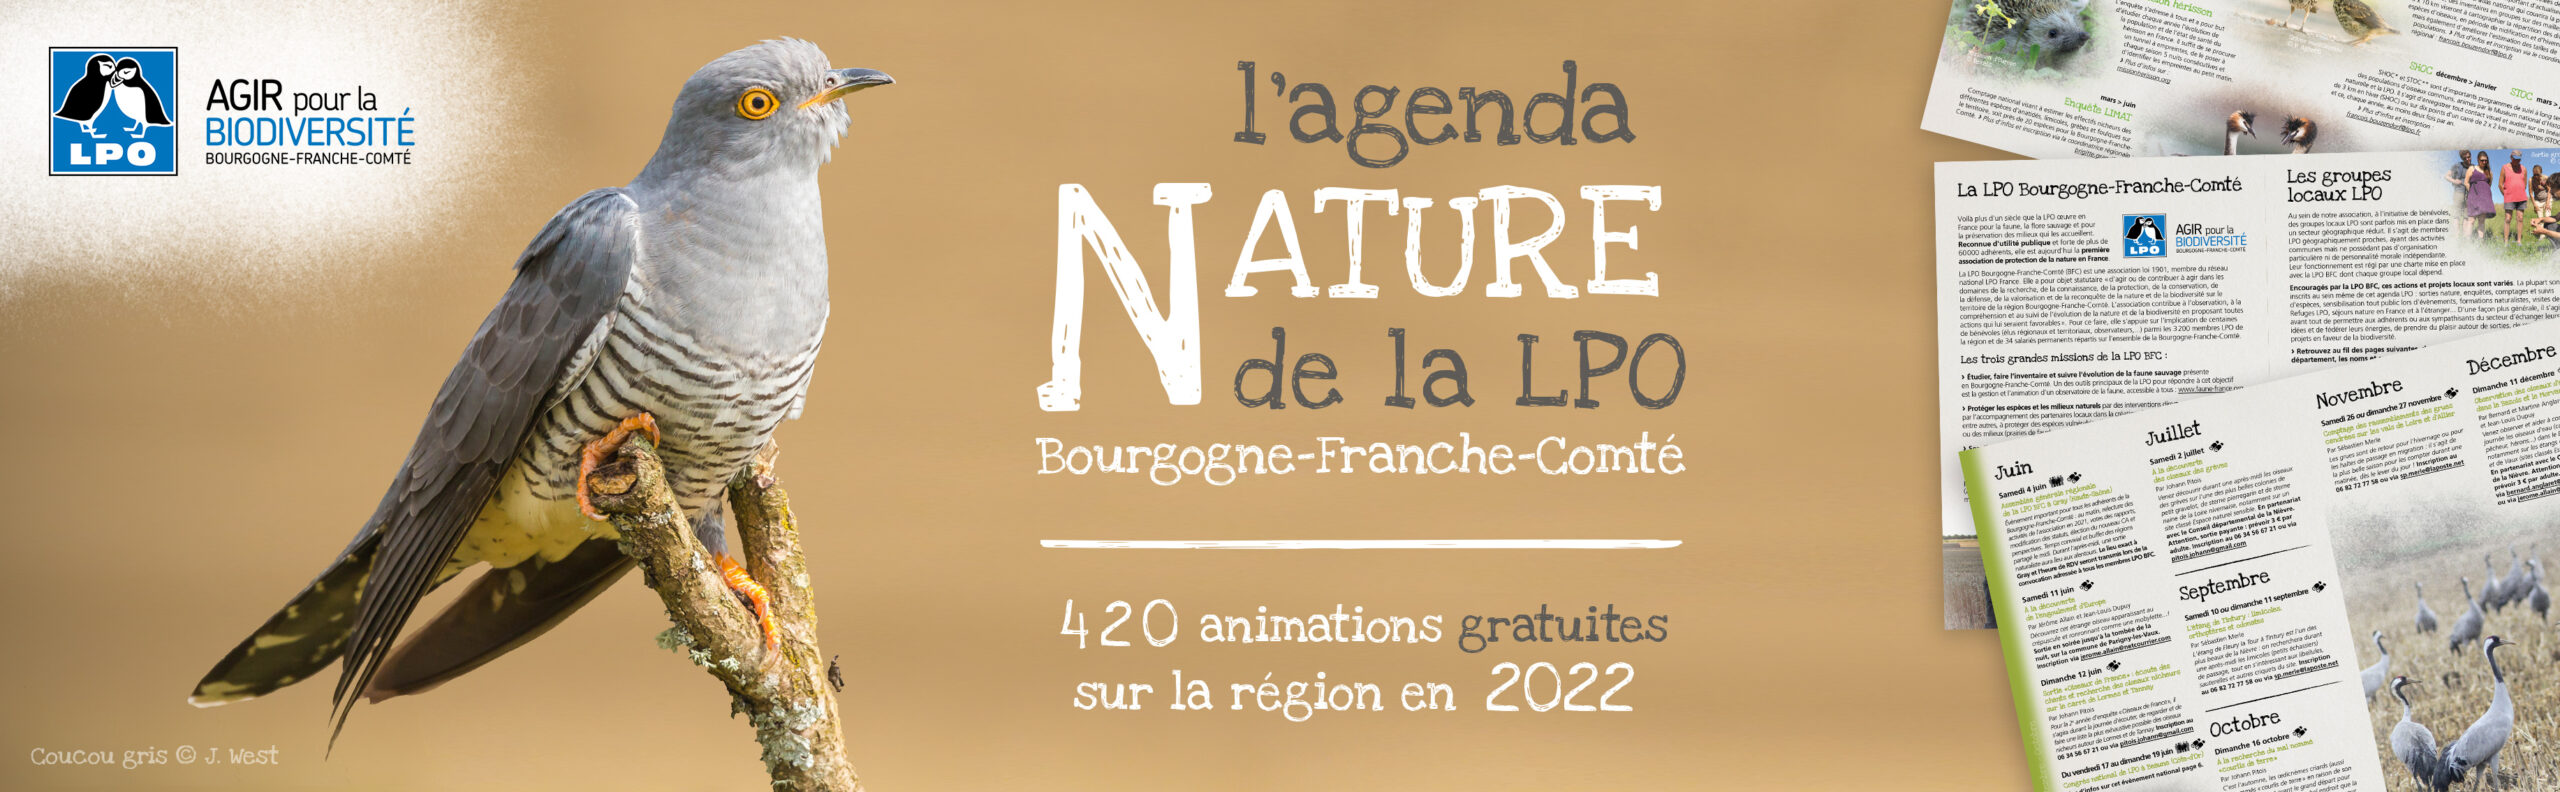 Bandeau-web-agenda-nature-LPO-BFC-2022 v2